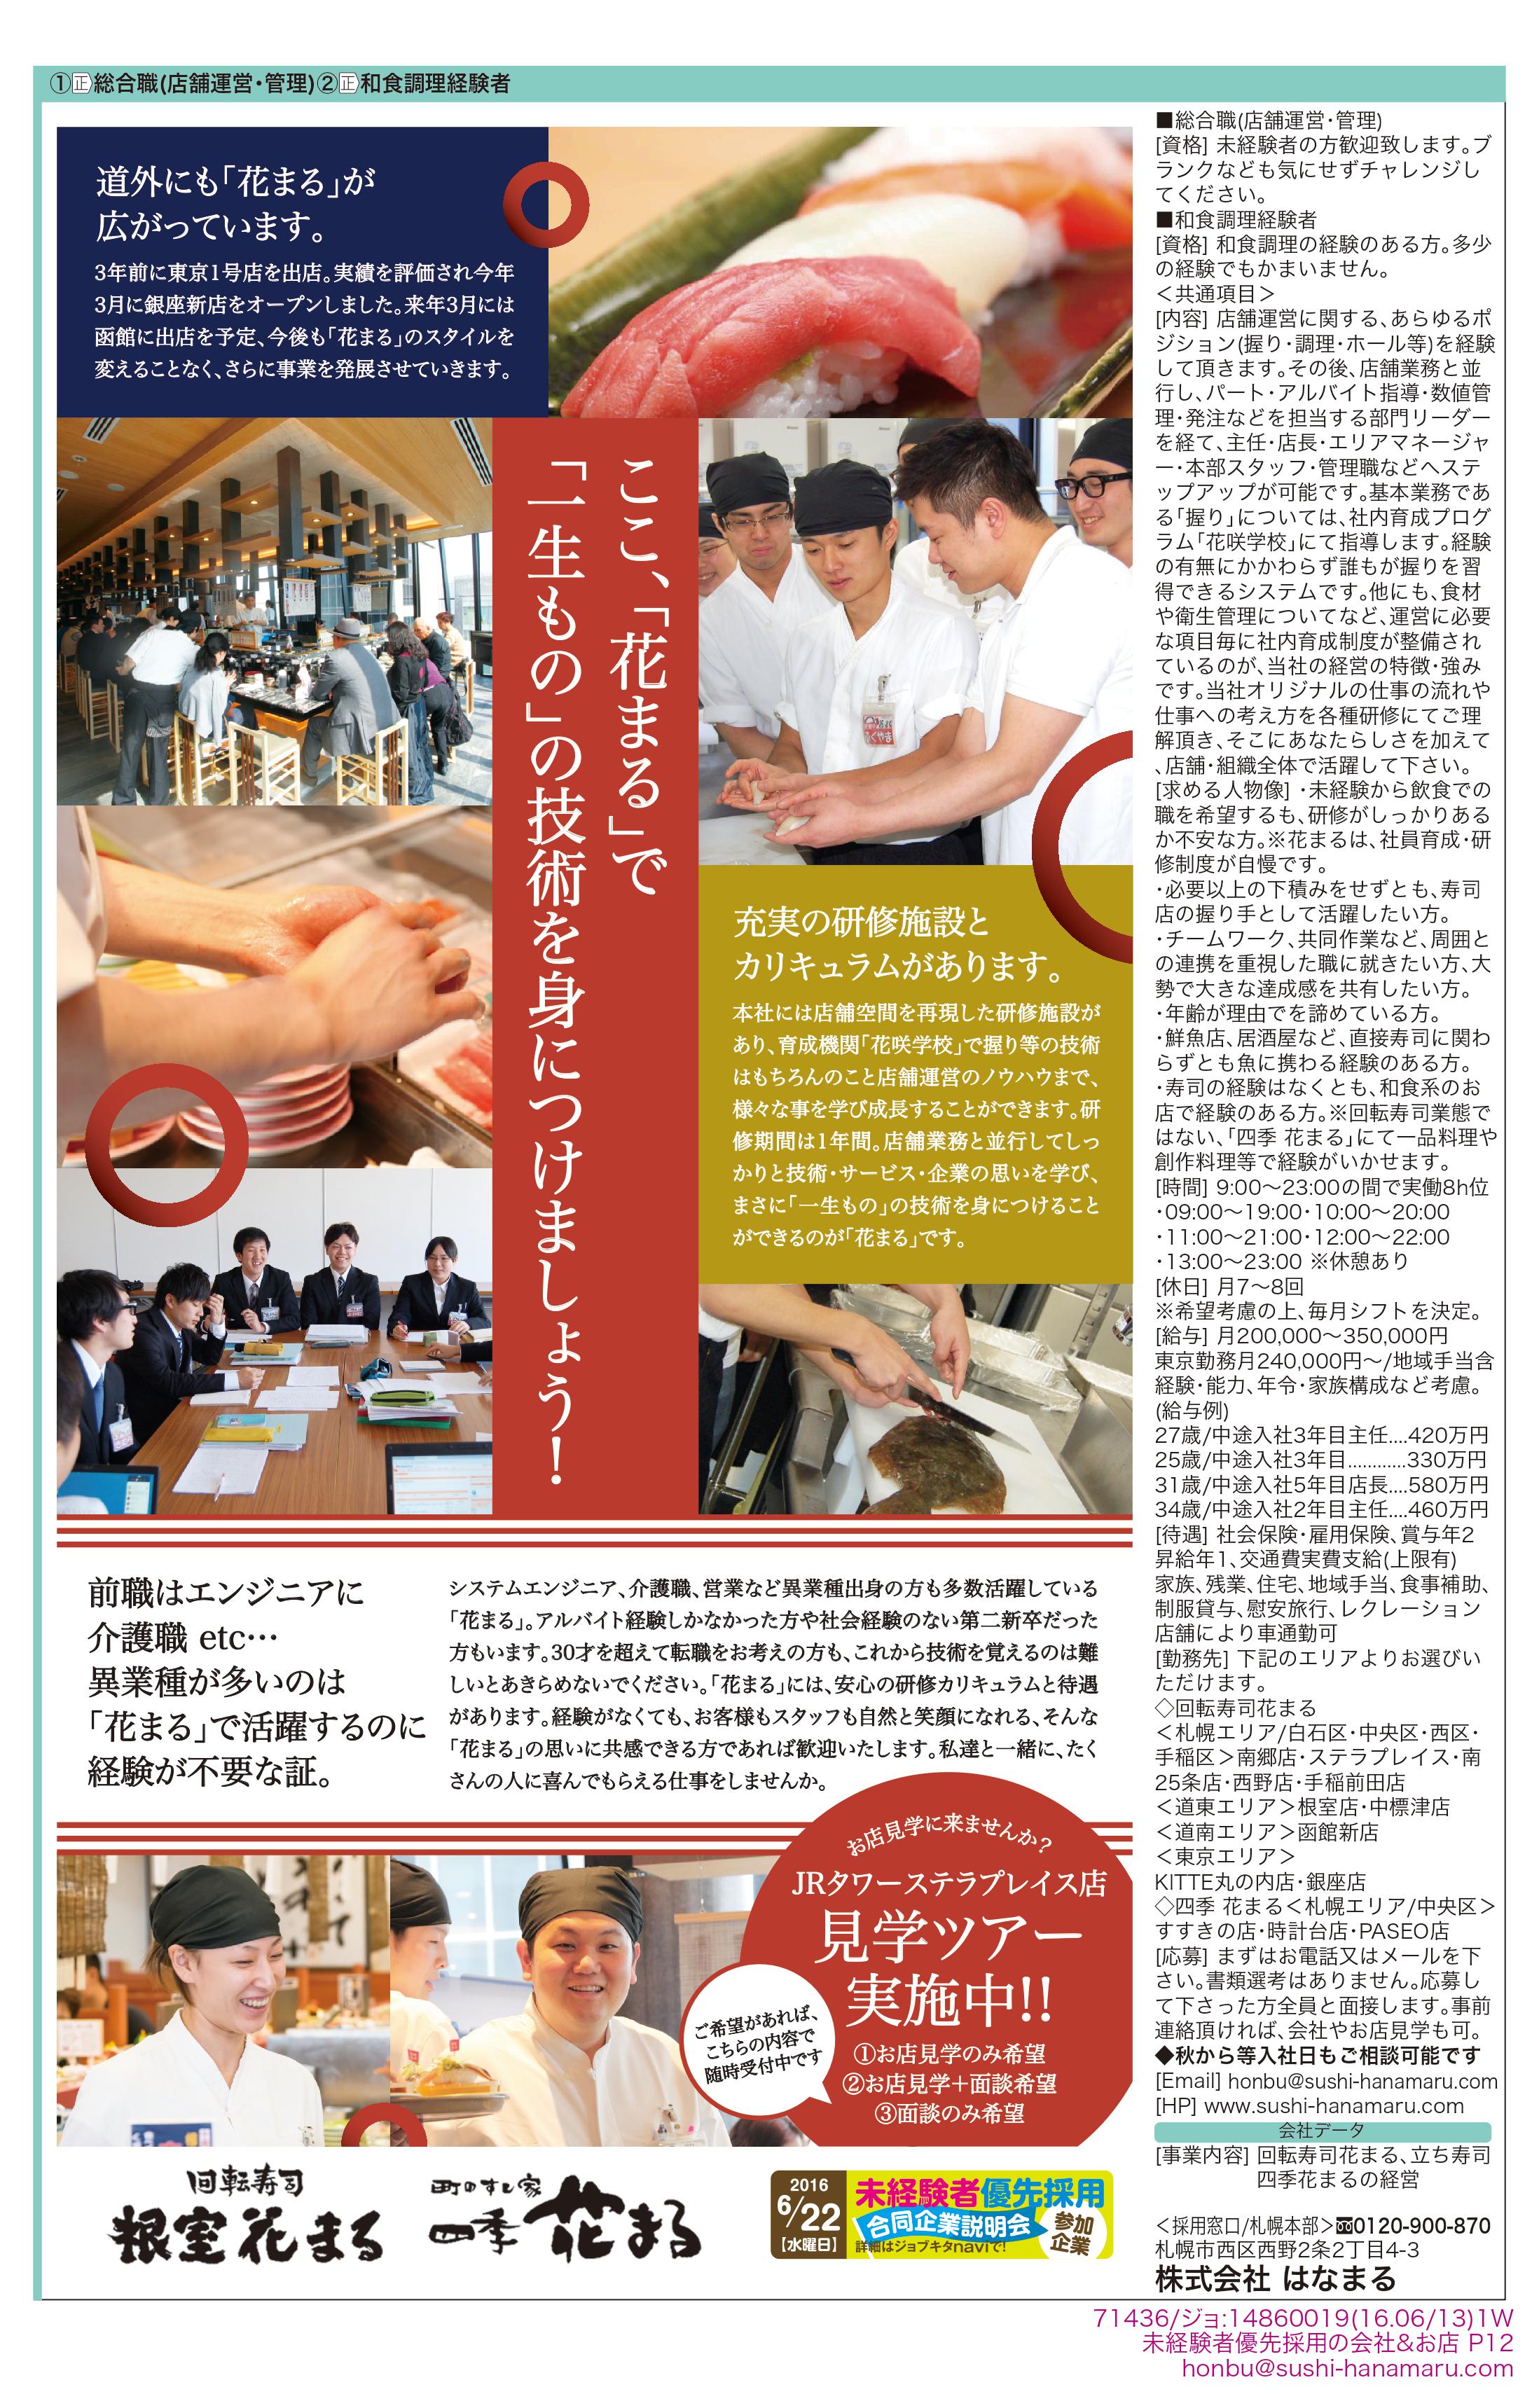 http://hanamaru.wsabc.jp/career-news/0001.jpg